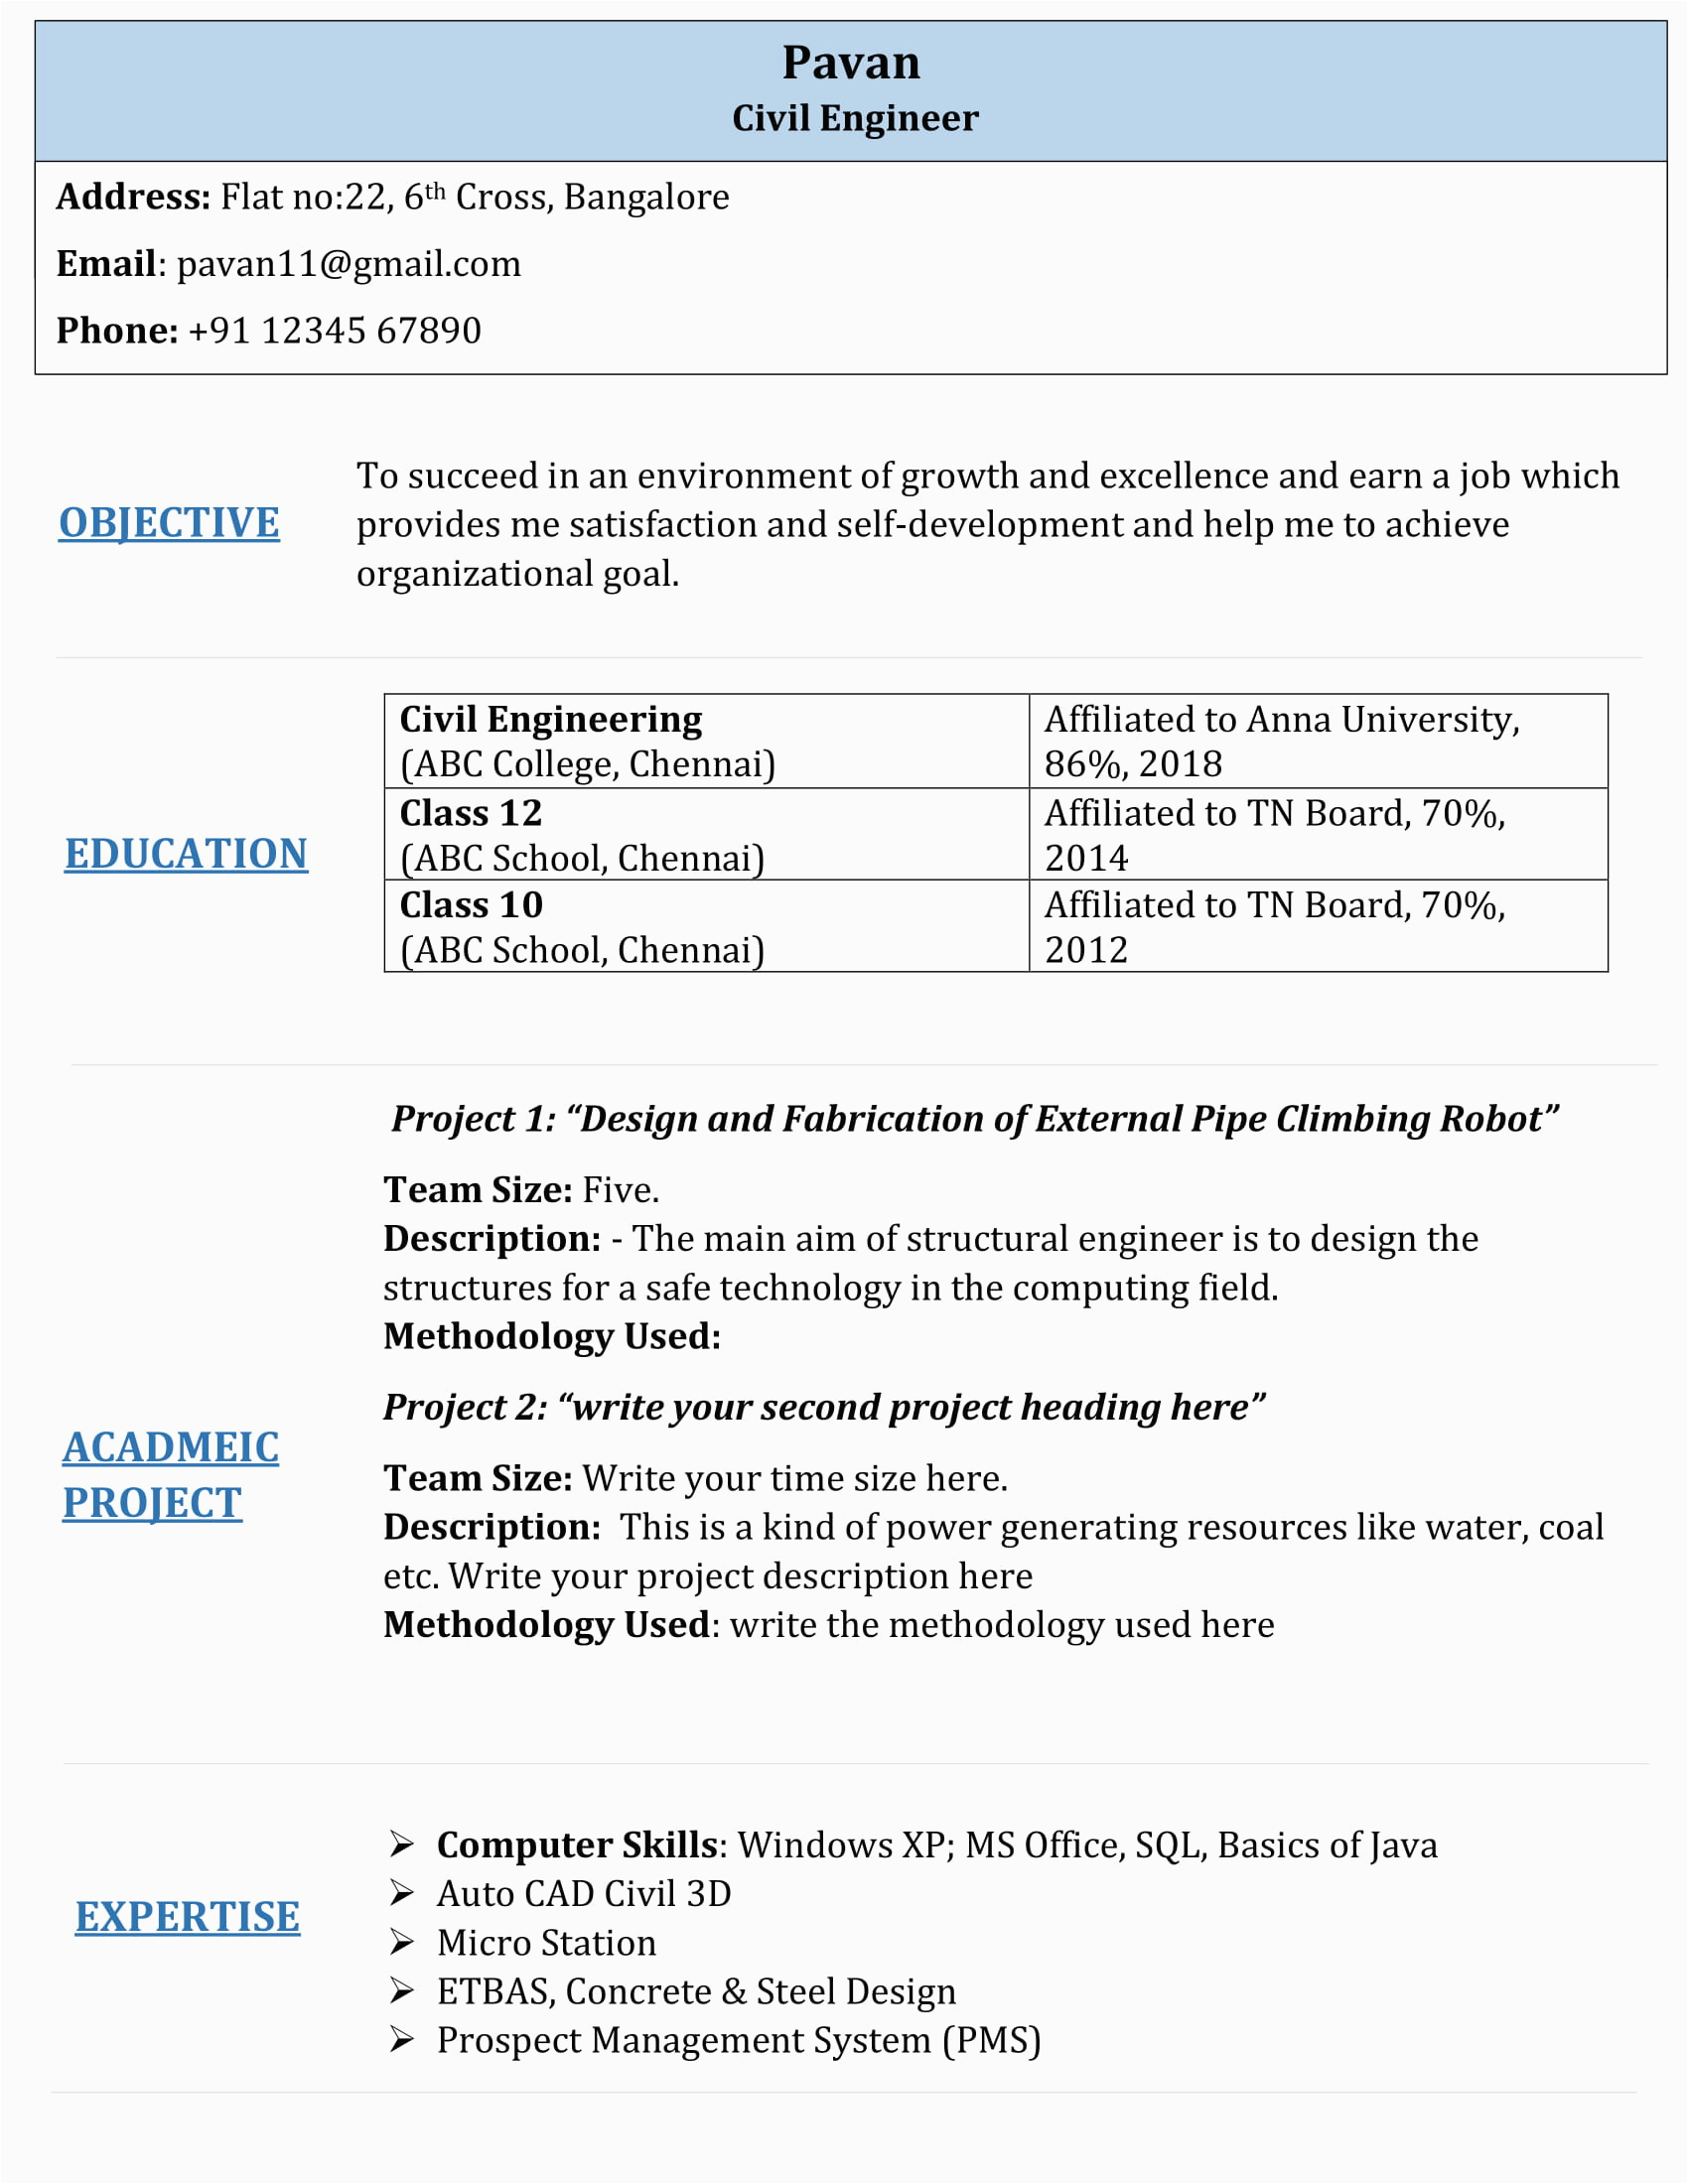 Civil Engineering Resume Samples for Freshers Pdf Fresher Civil Engineering Resume Template 2 – Samavabudh